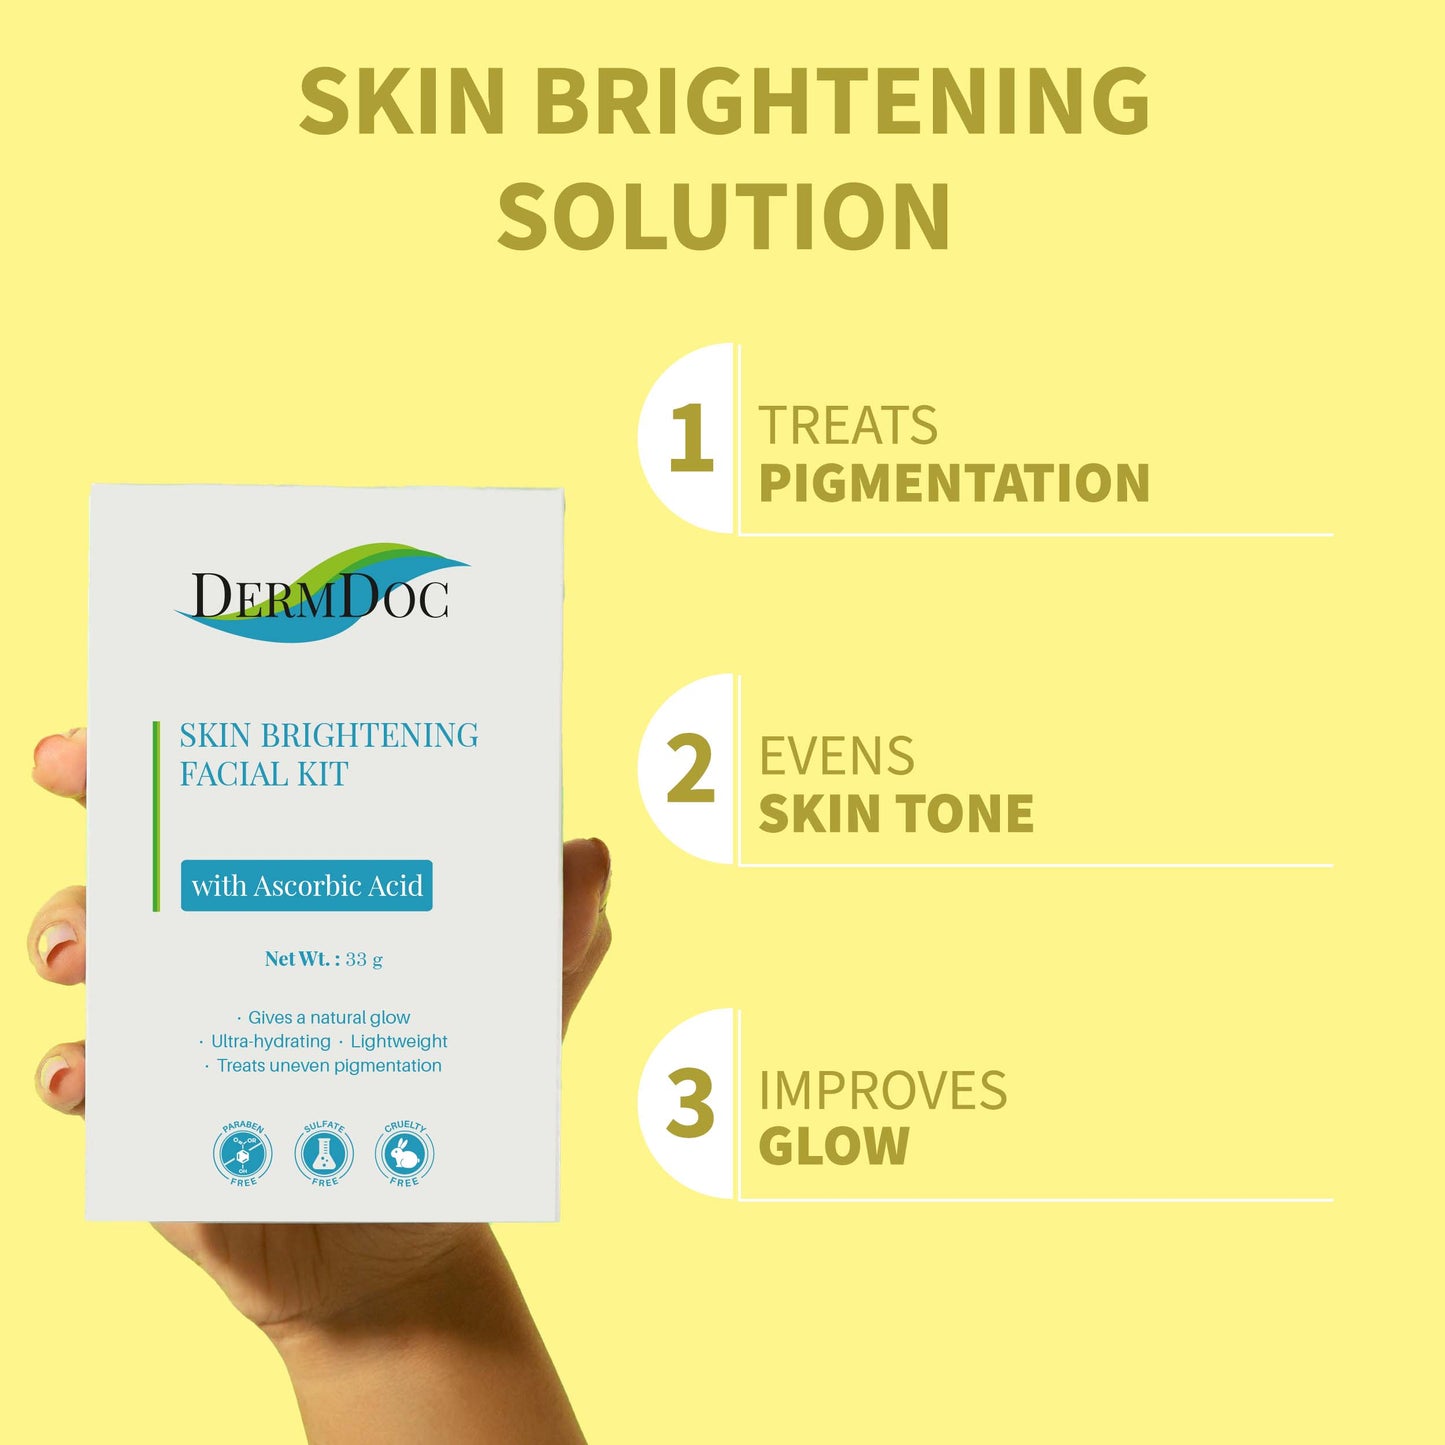 DermDoc Skin Brightening Facial Kit with Ascorbic Acid (33 g)